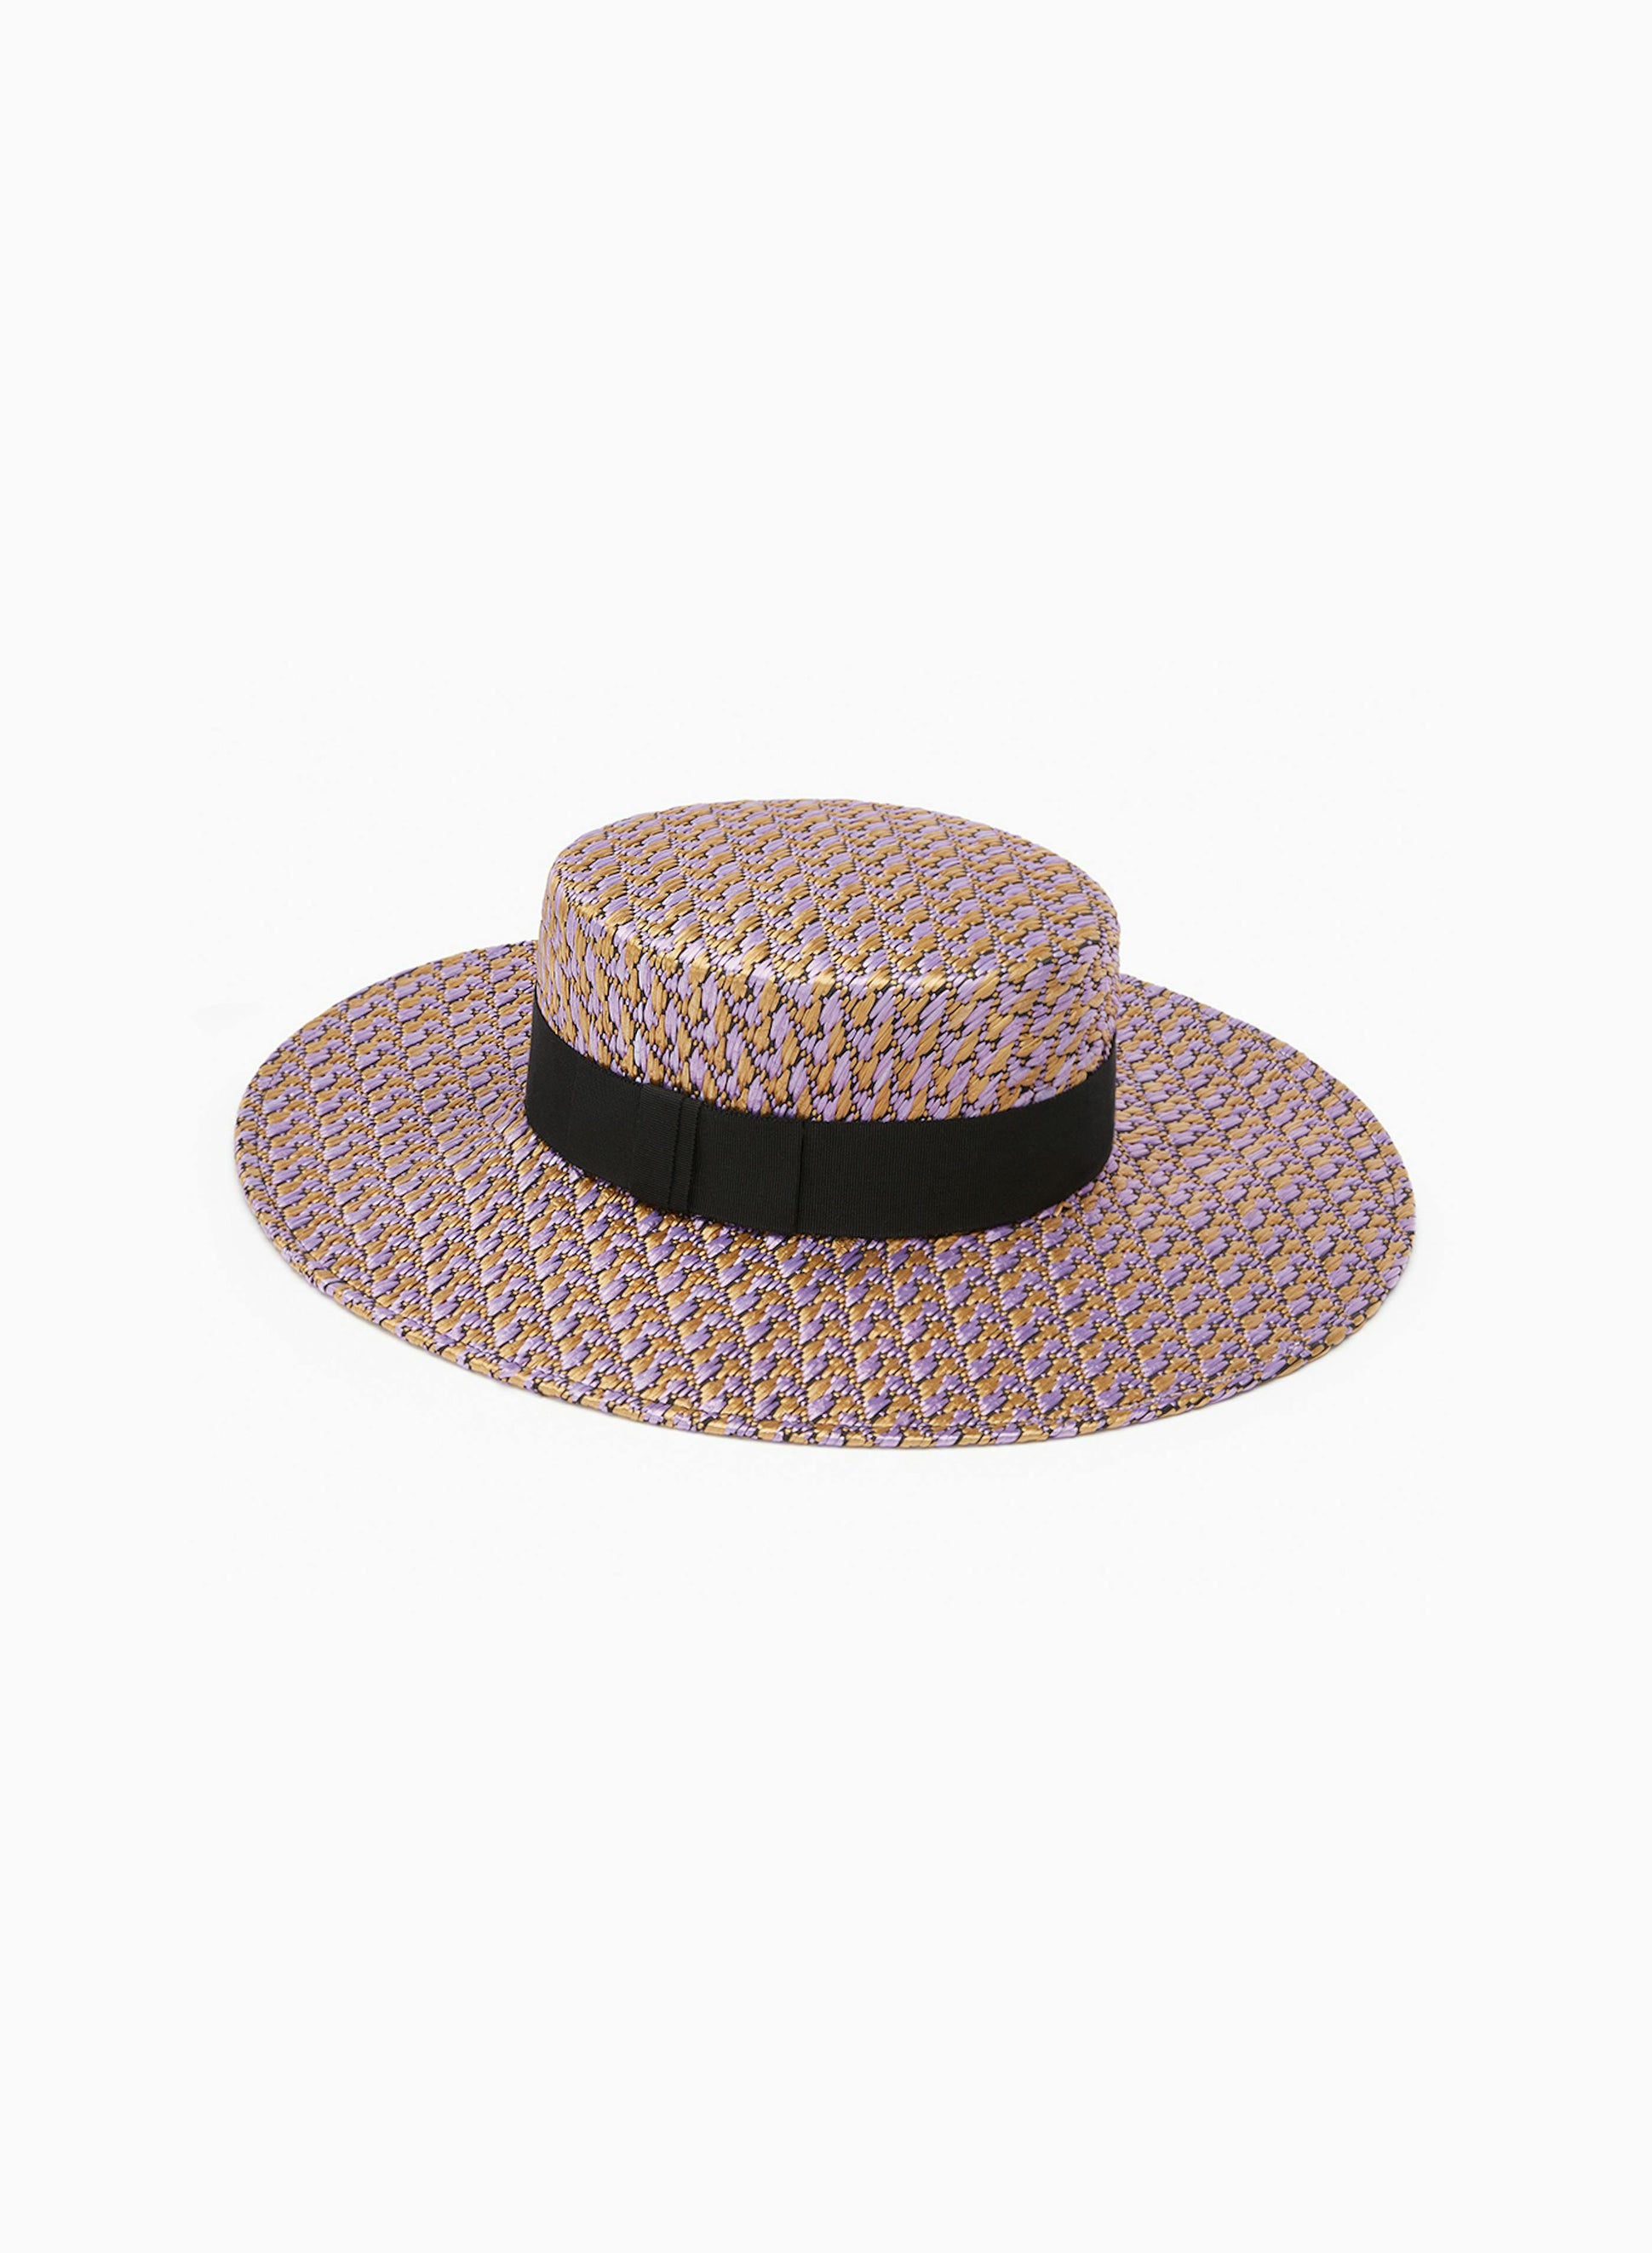 Stripped raffia canotier hat in mauve and gold - Nina Ricci